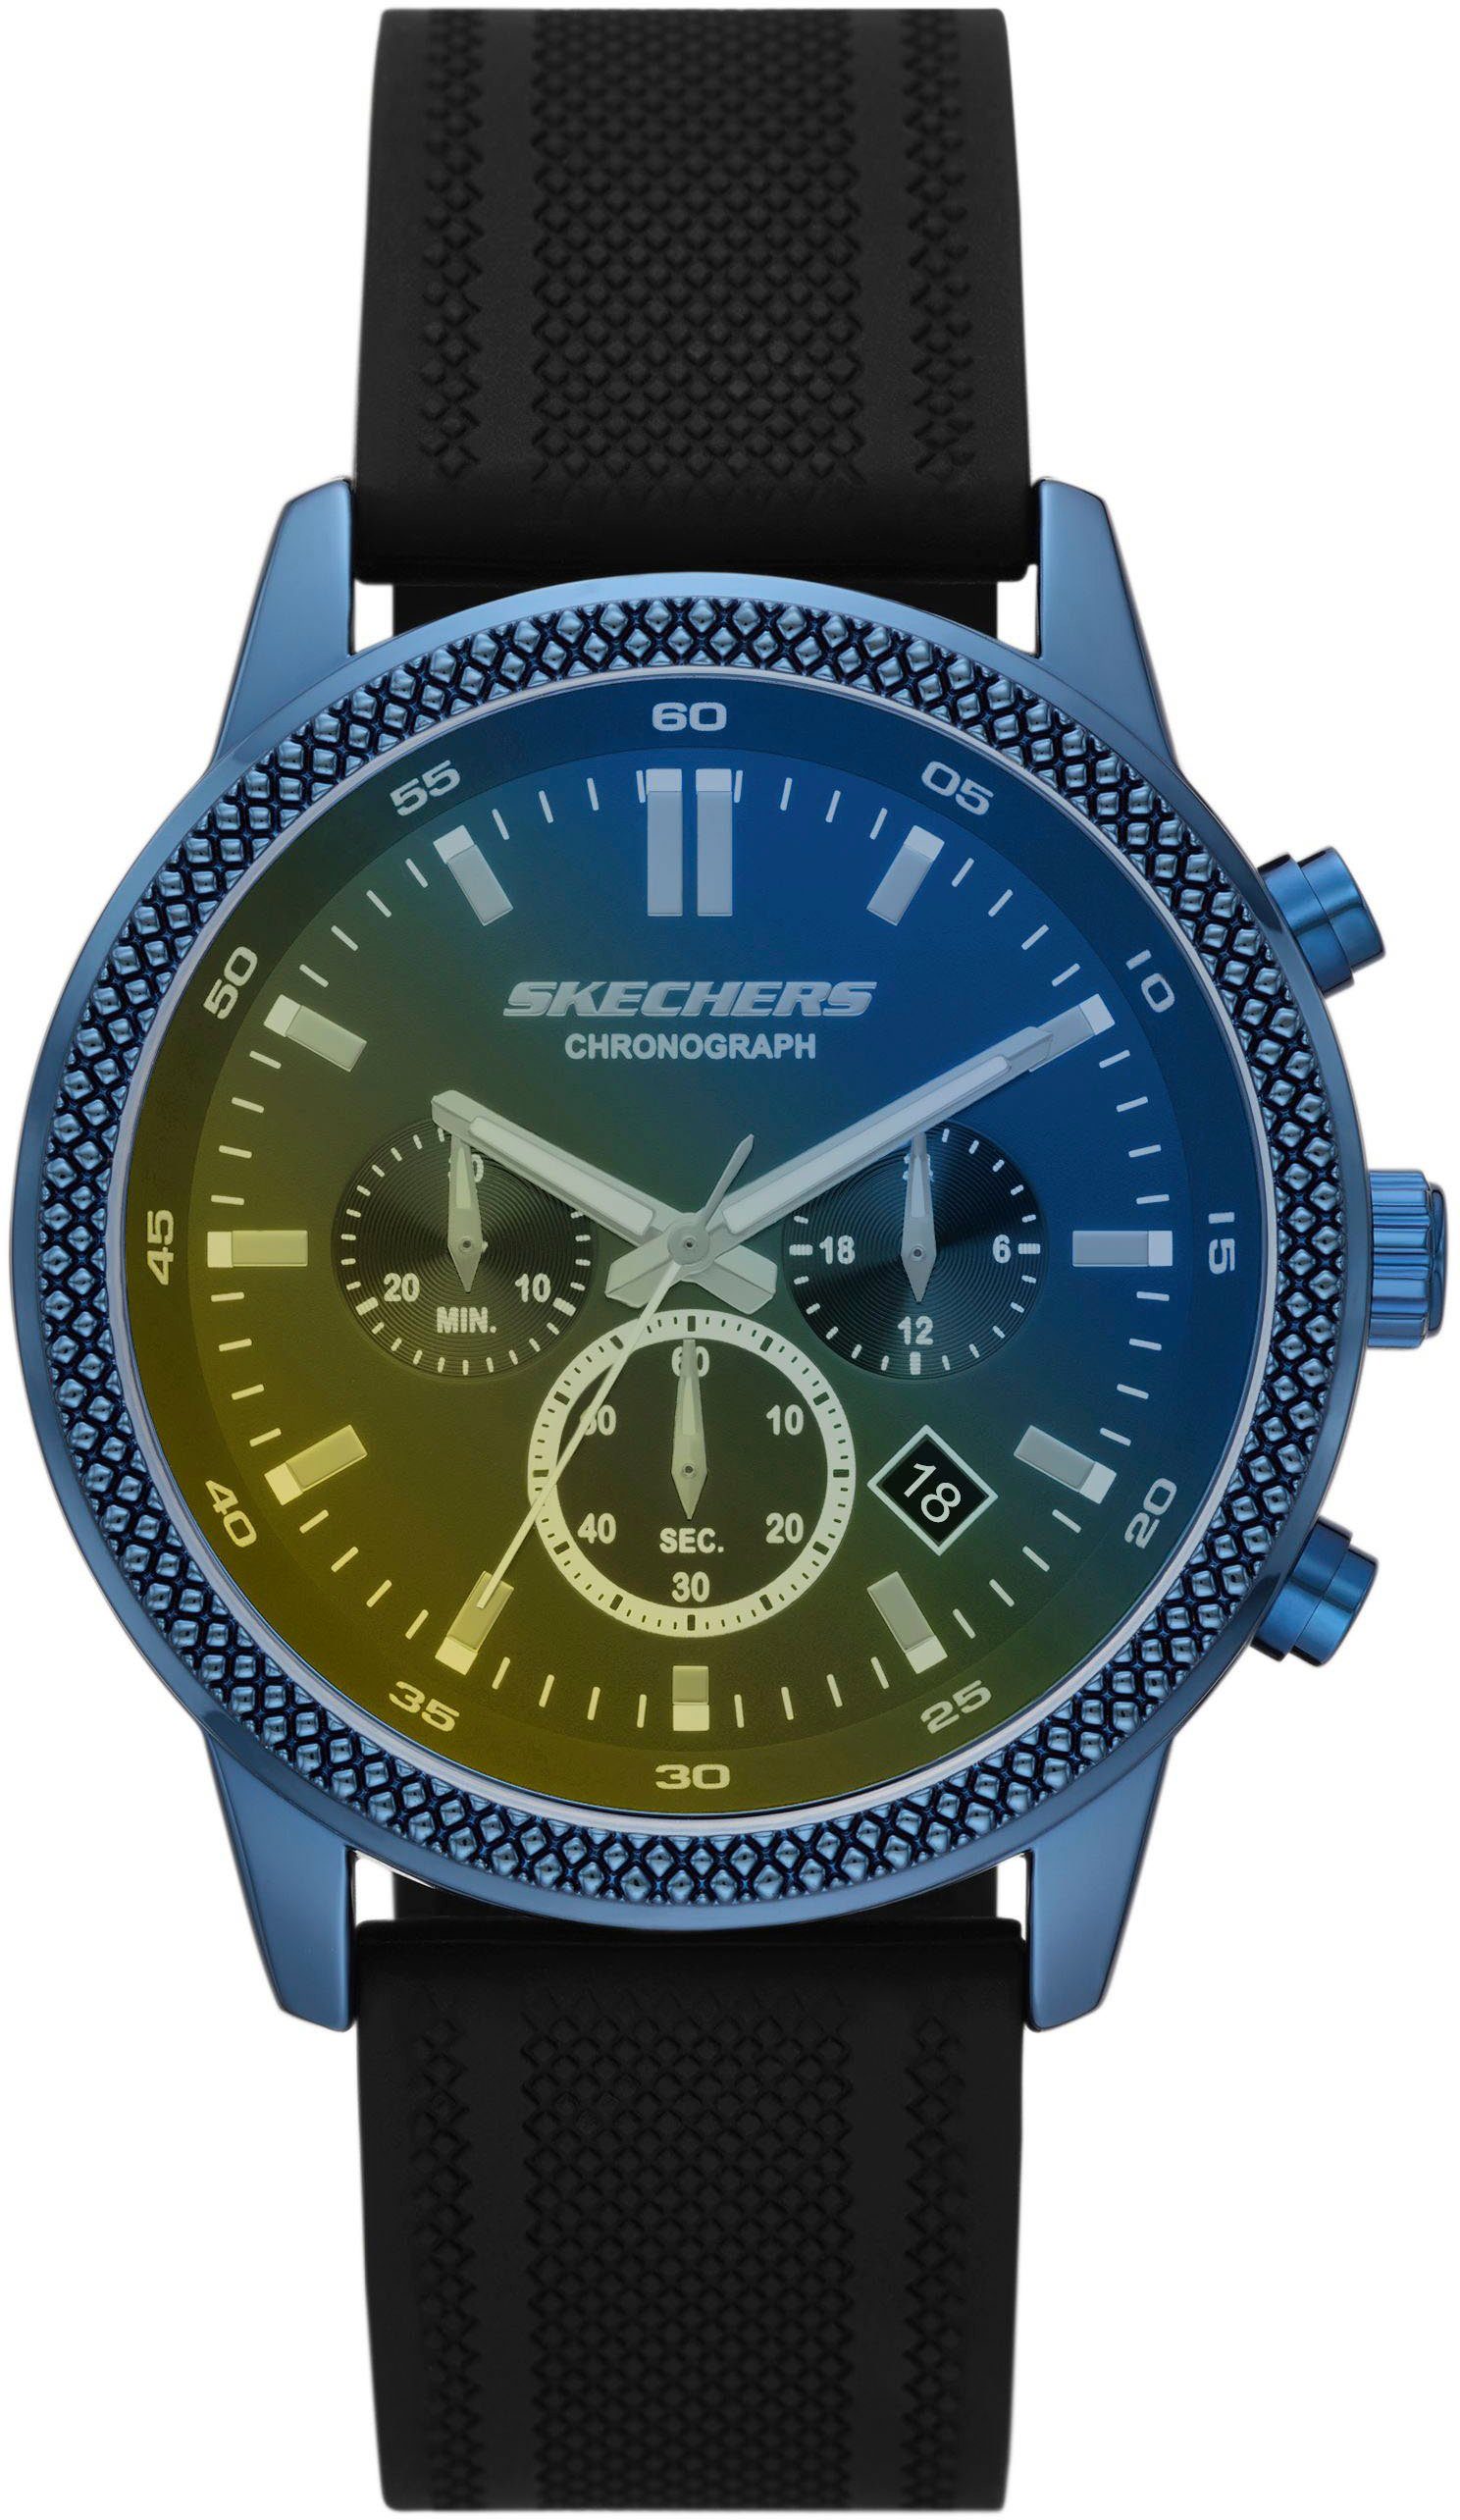 Skechers Chronograph CLARKDALE, SR5198, Quarzuhr, Armbanduhr, Herrenuhr, Stoppfunktion, Datum